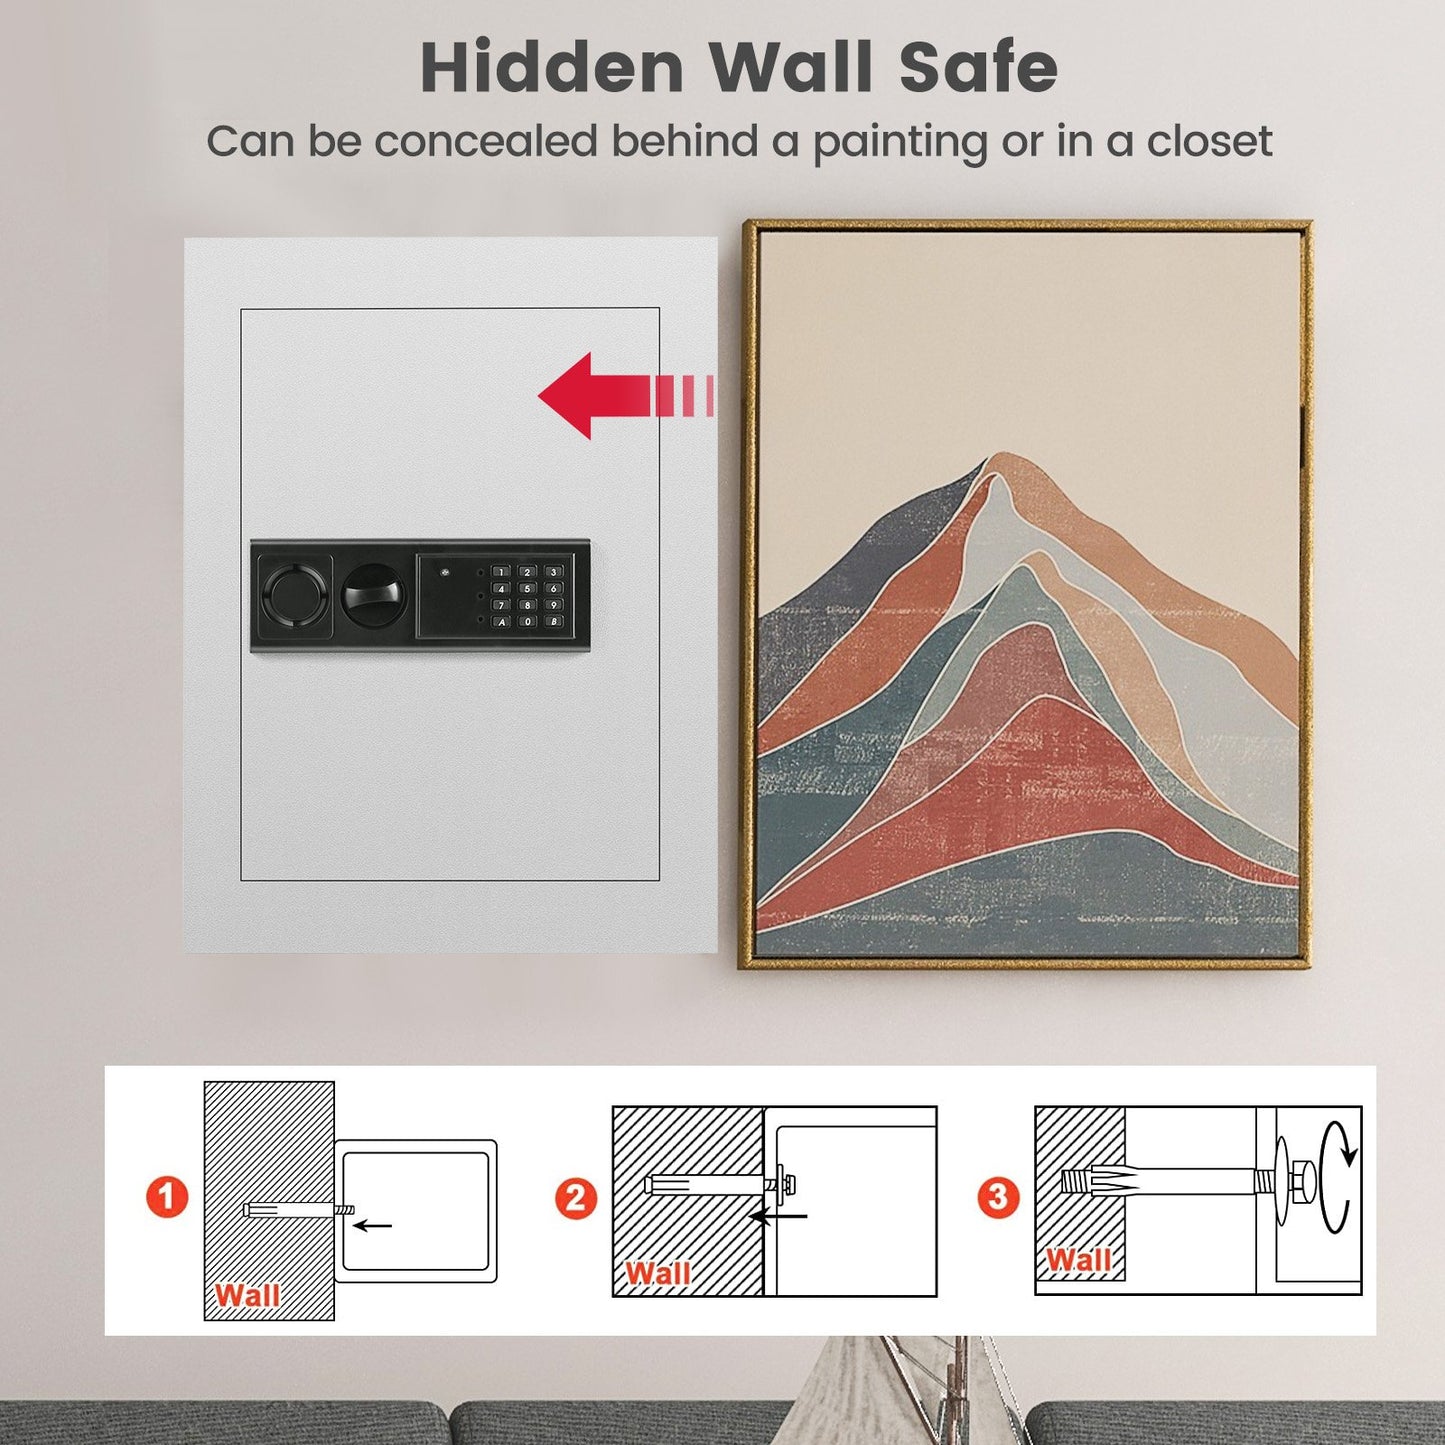 Digital Flat Recessed Wall Safe Security Lock Gun Cash Box, White at Gallery Canada